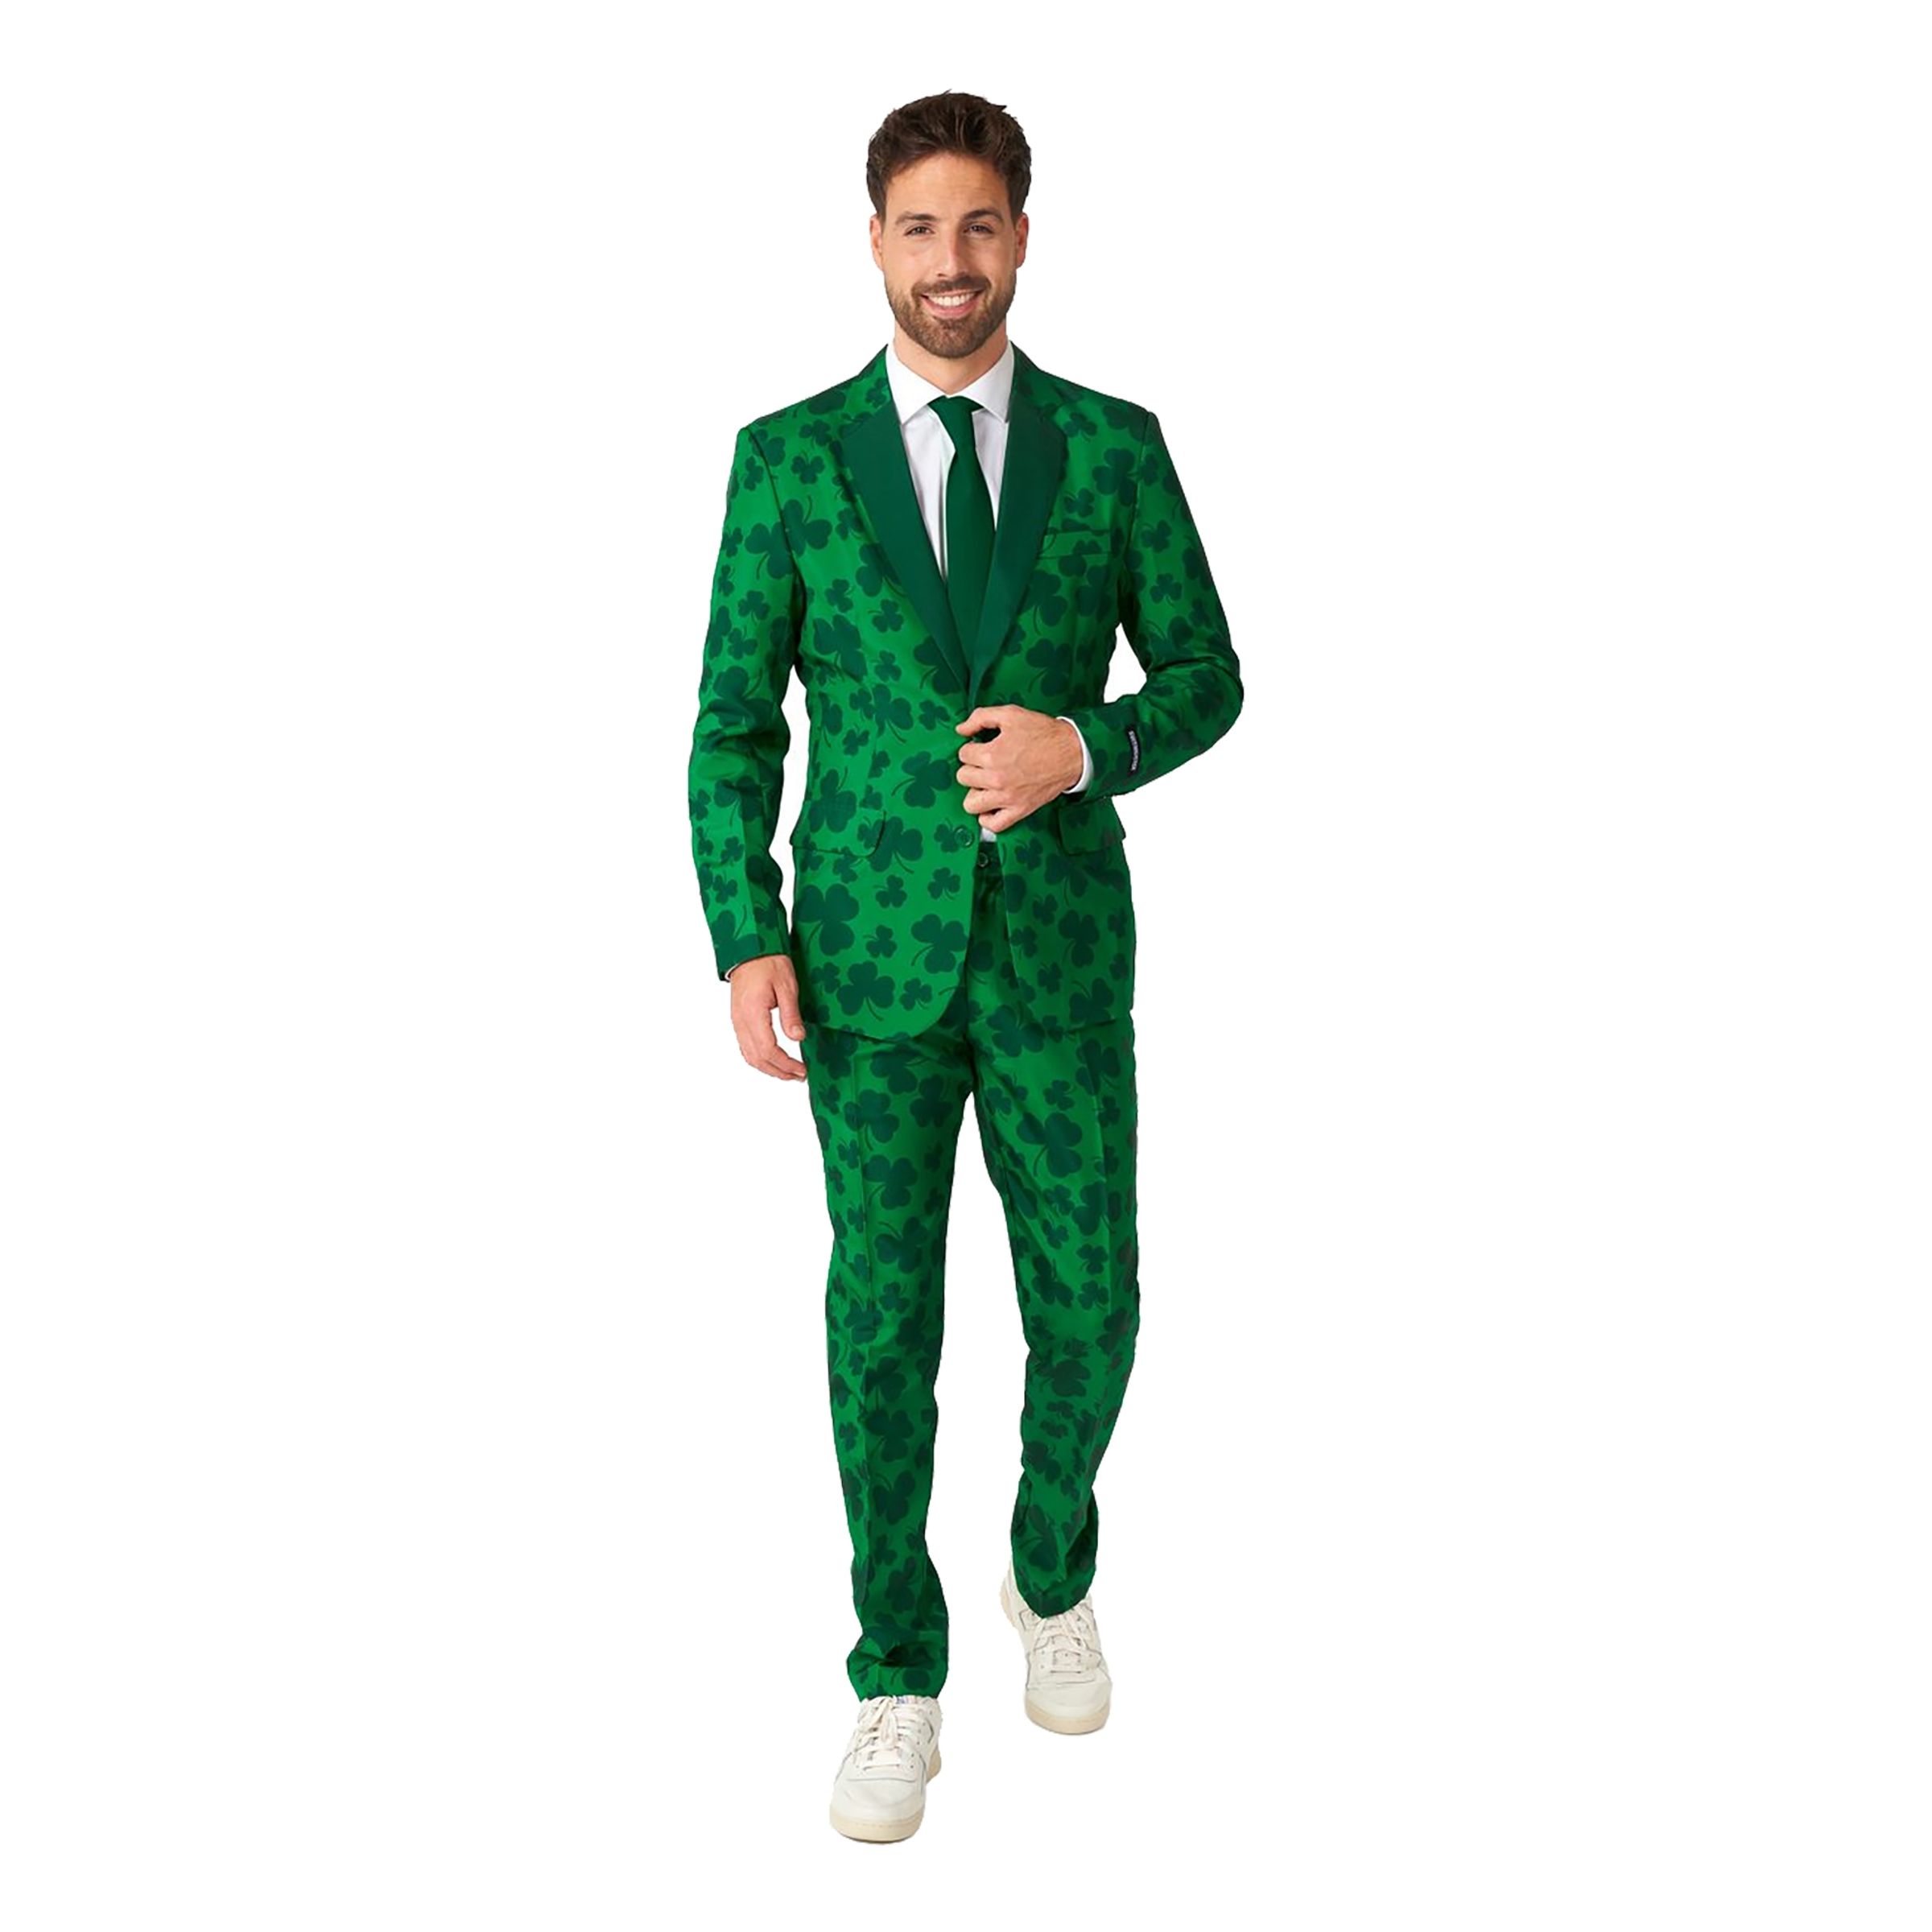 Suitmeister St. Patrick Grön Kostym - Small